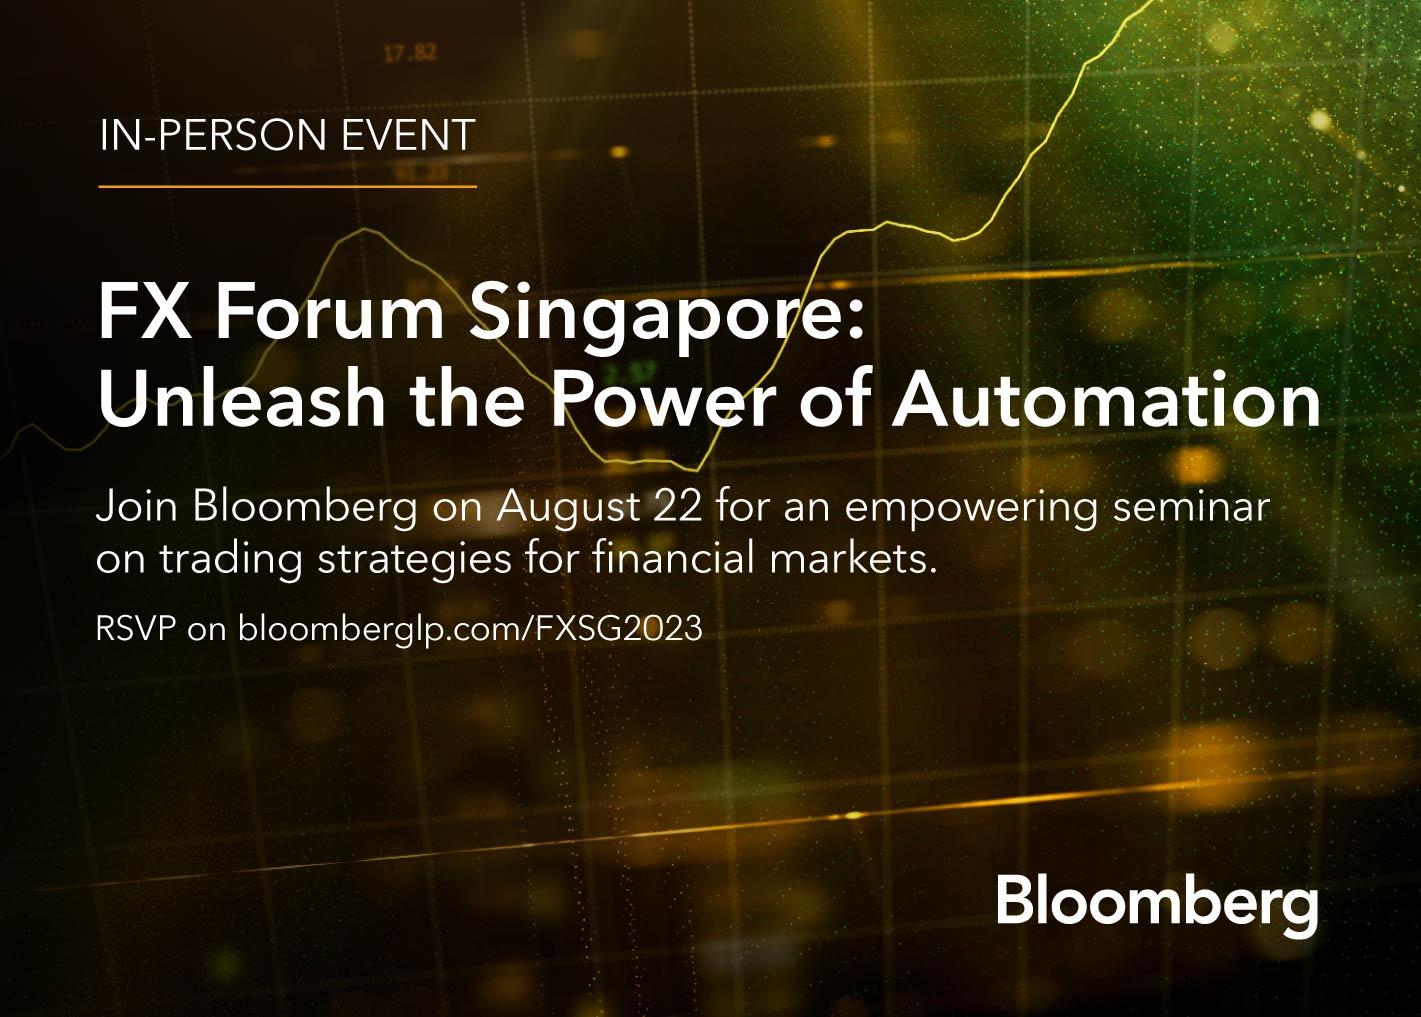 FX Forum Singapore: Unleash the Power of Automation